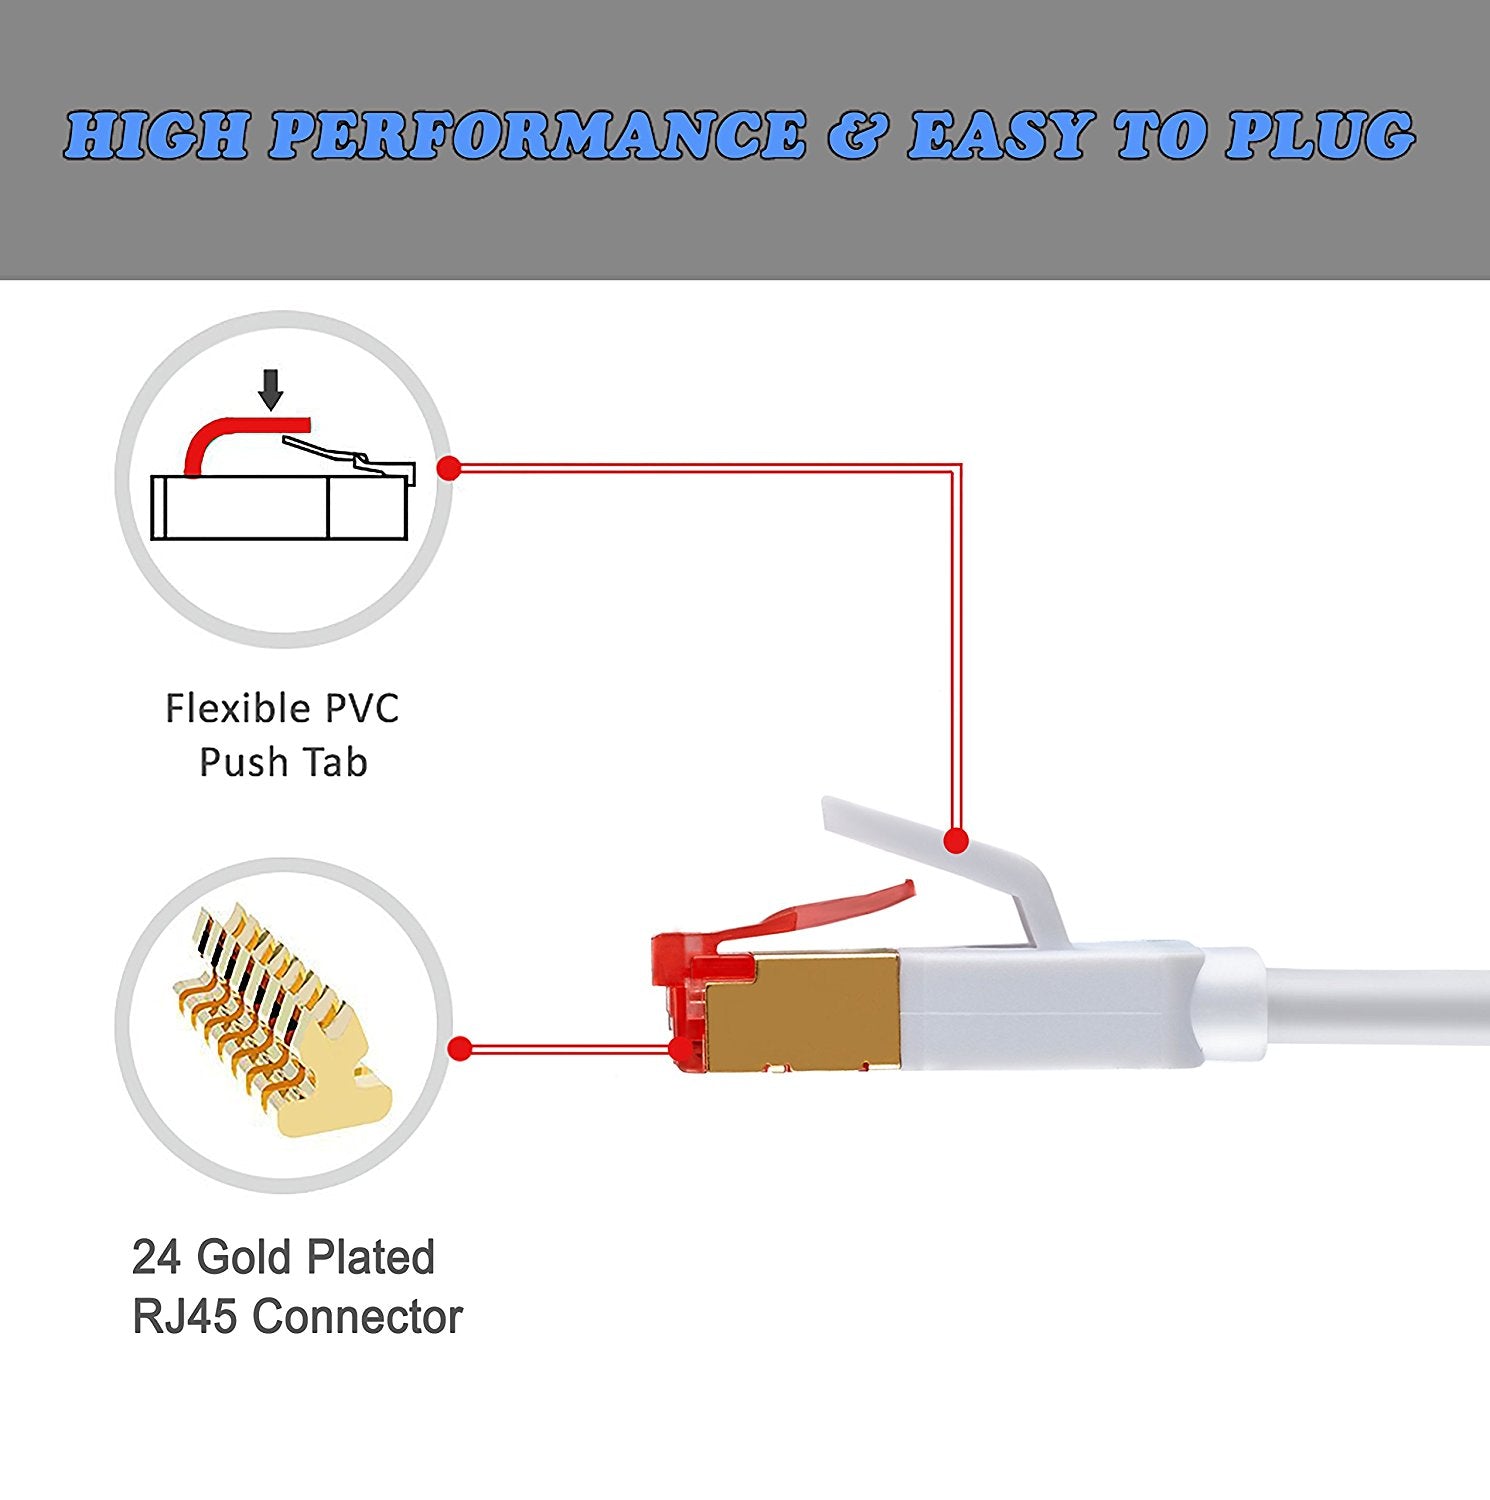 Ethernet Gigabit Lan Network Cable (RJ45) Advanced CAT 7 |Gold Connectors| 10Gbps 600MHz |10/100/1000Mbit/s | Patch cable |STP| compatible with CAT.5 / CAT.5e / CAT.6 | Switch/Router/Modem/Patch panel / Access Point / patch fields | 20M IBRA Round White